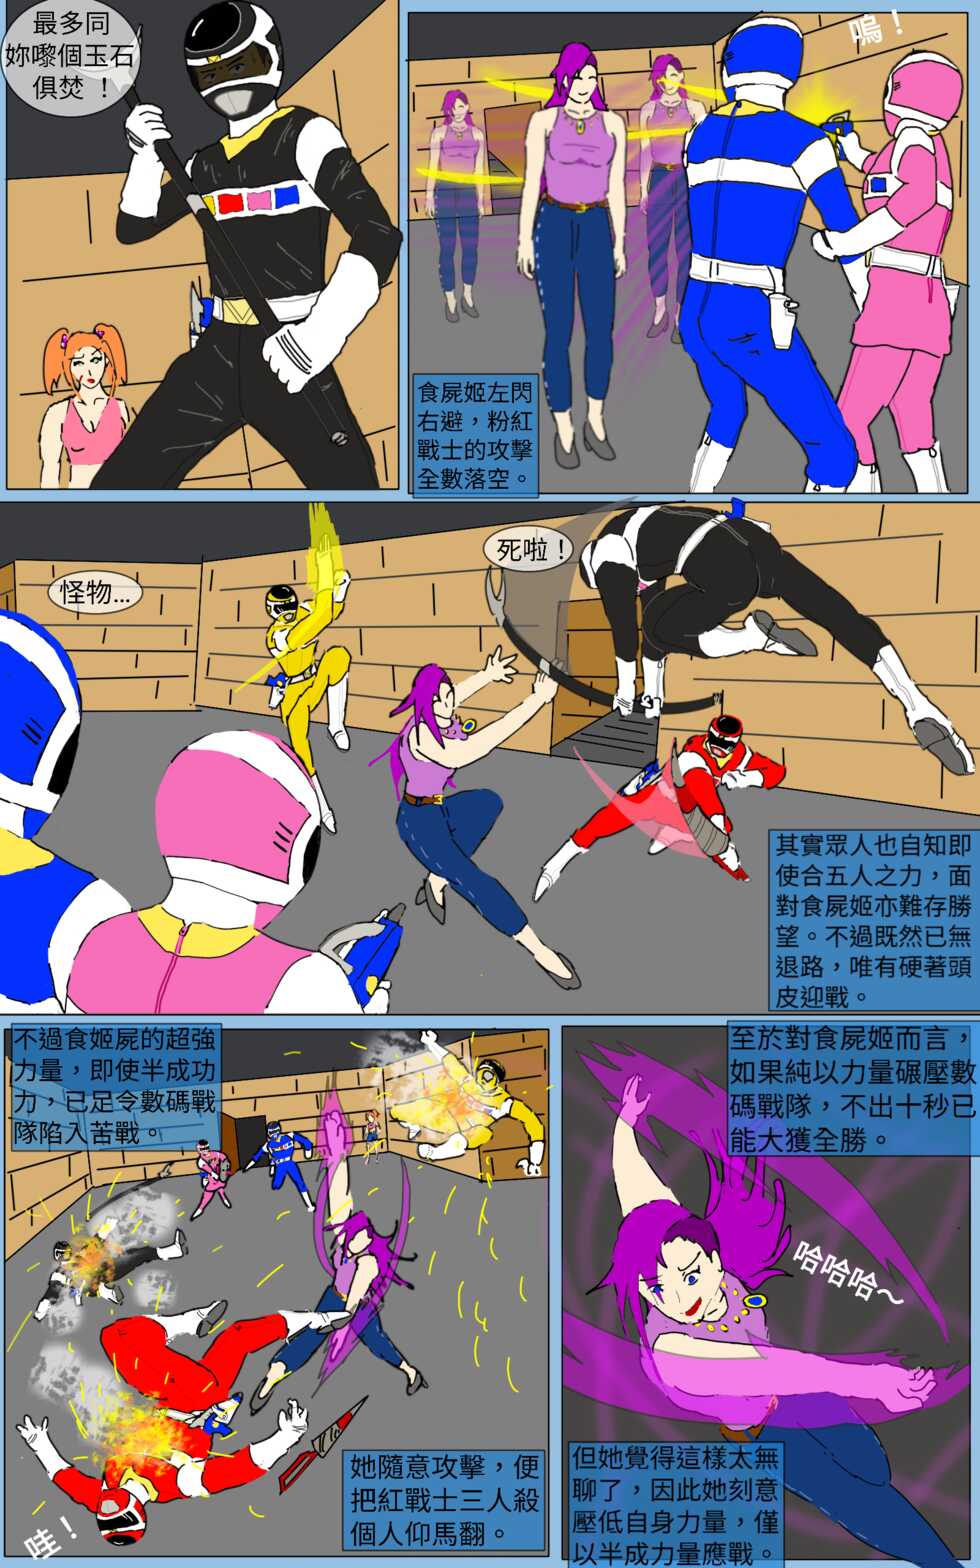 [MA] Mission 28 (Denji Sentai Megaranger) - Page 4